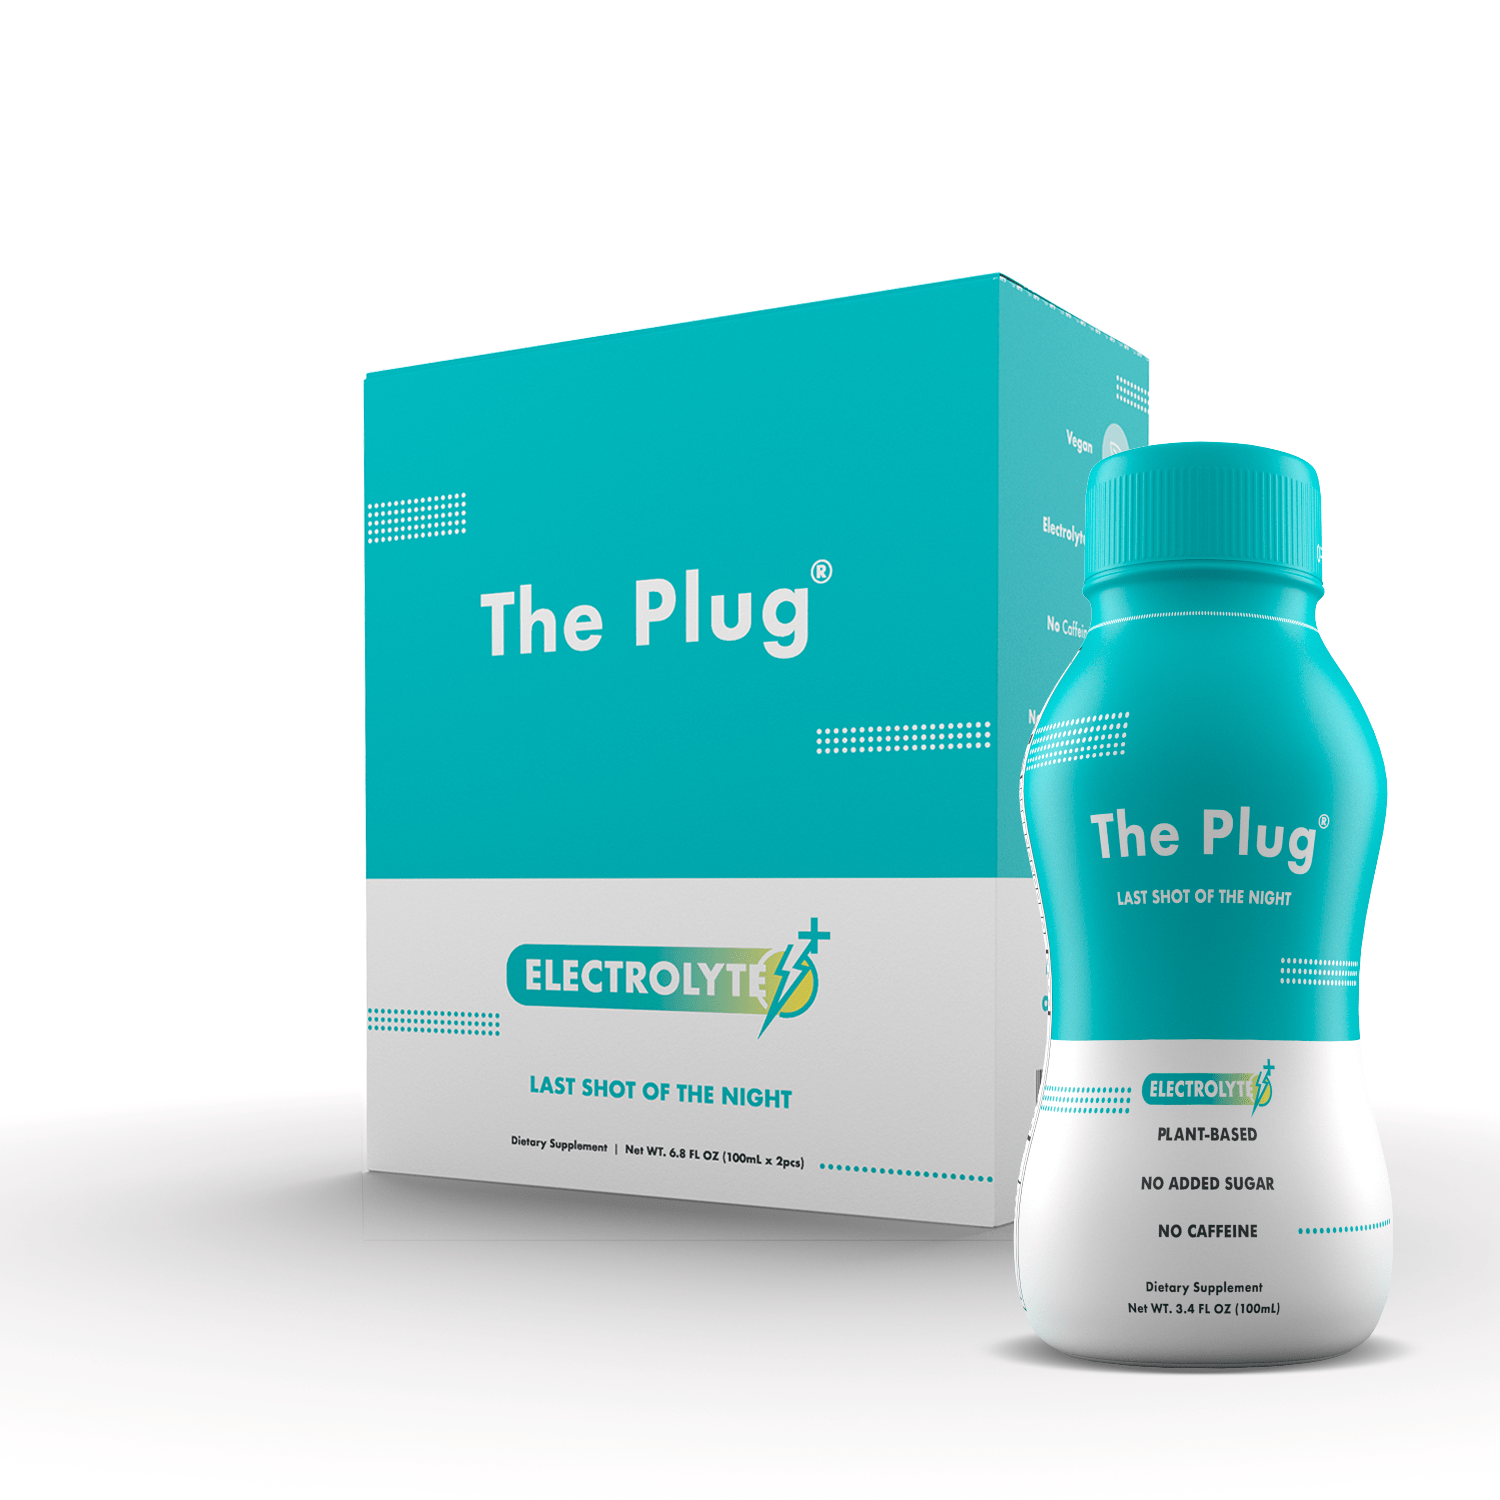 The Plug Drink Plant-based - The Plug Drink